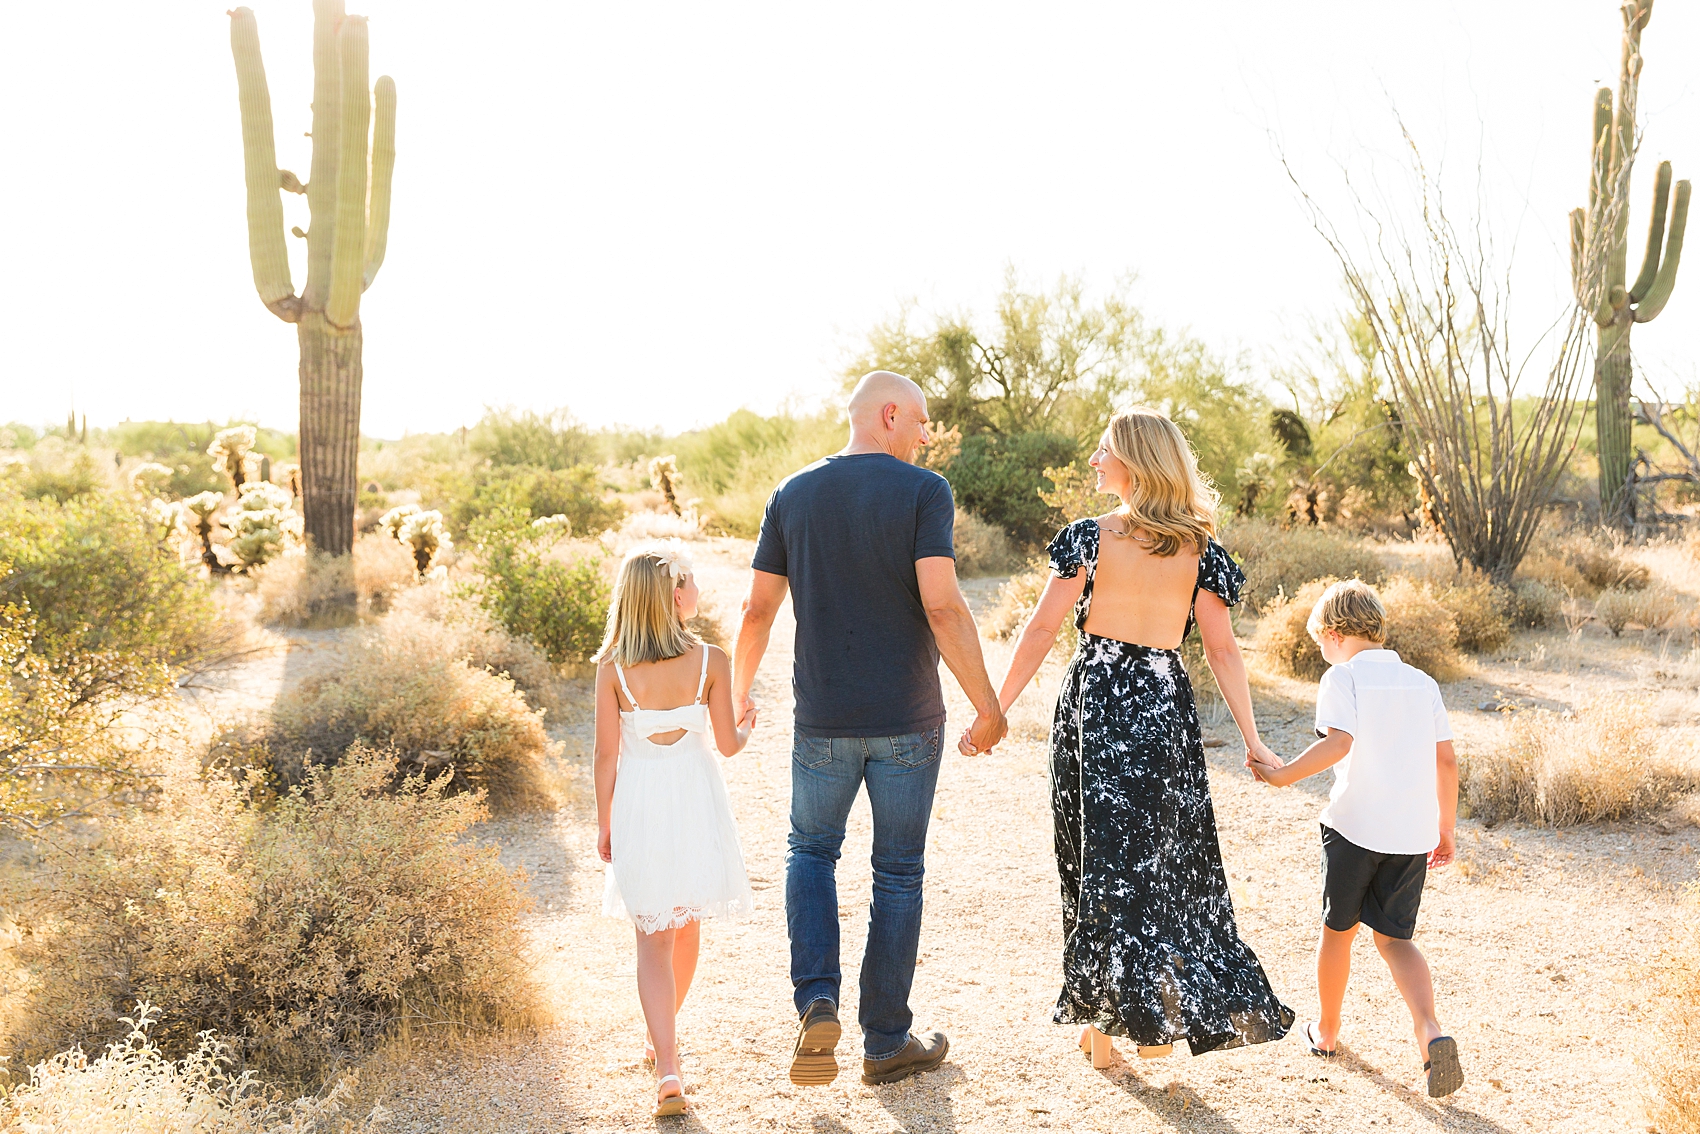 Leah Hope Photography | Scottsdale Phoenix Arizona Family Photos | Desert Landscape Cactus Scenery Family Pictures | What to Wear | Family Posing Poses | Scottsdale Photographer